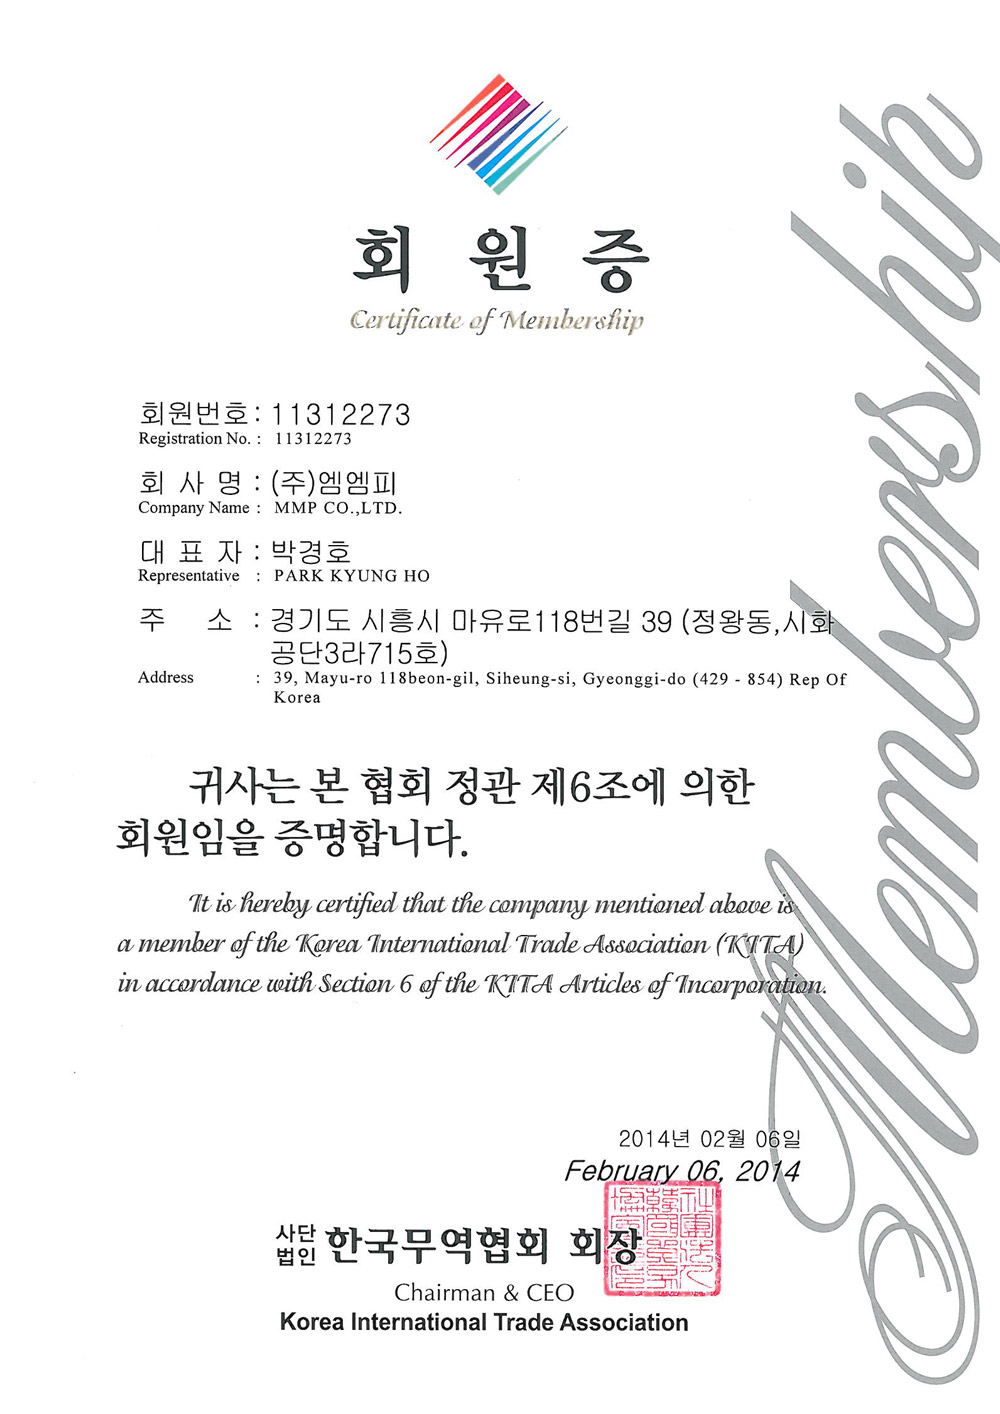 Membership of Korea International Trade Association